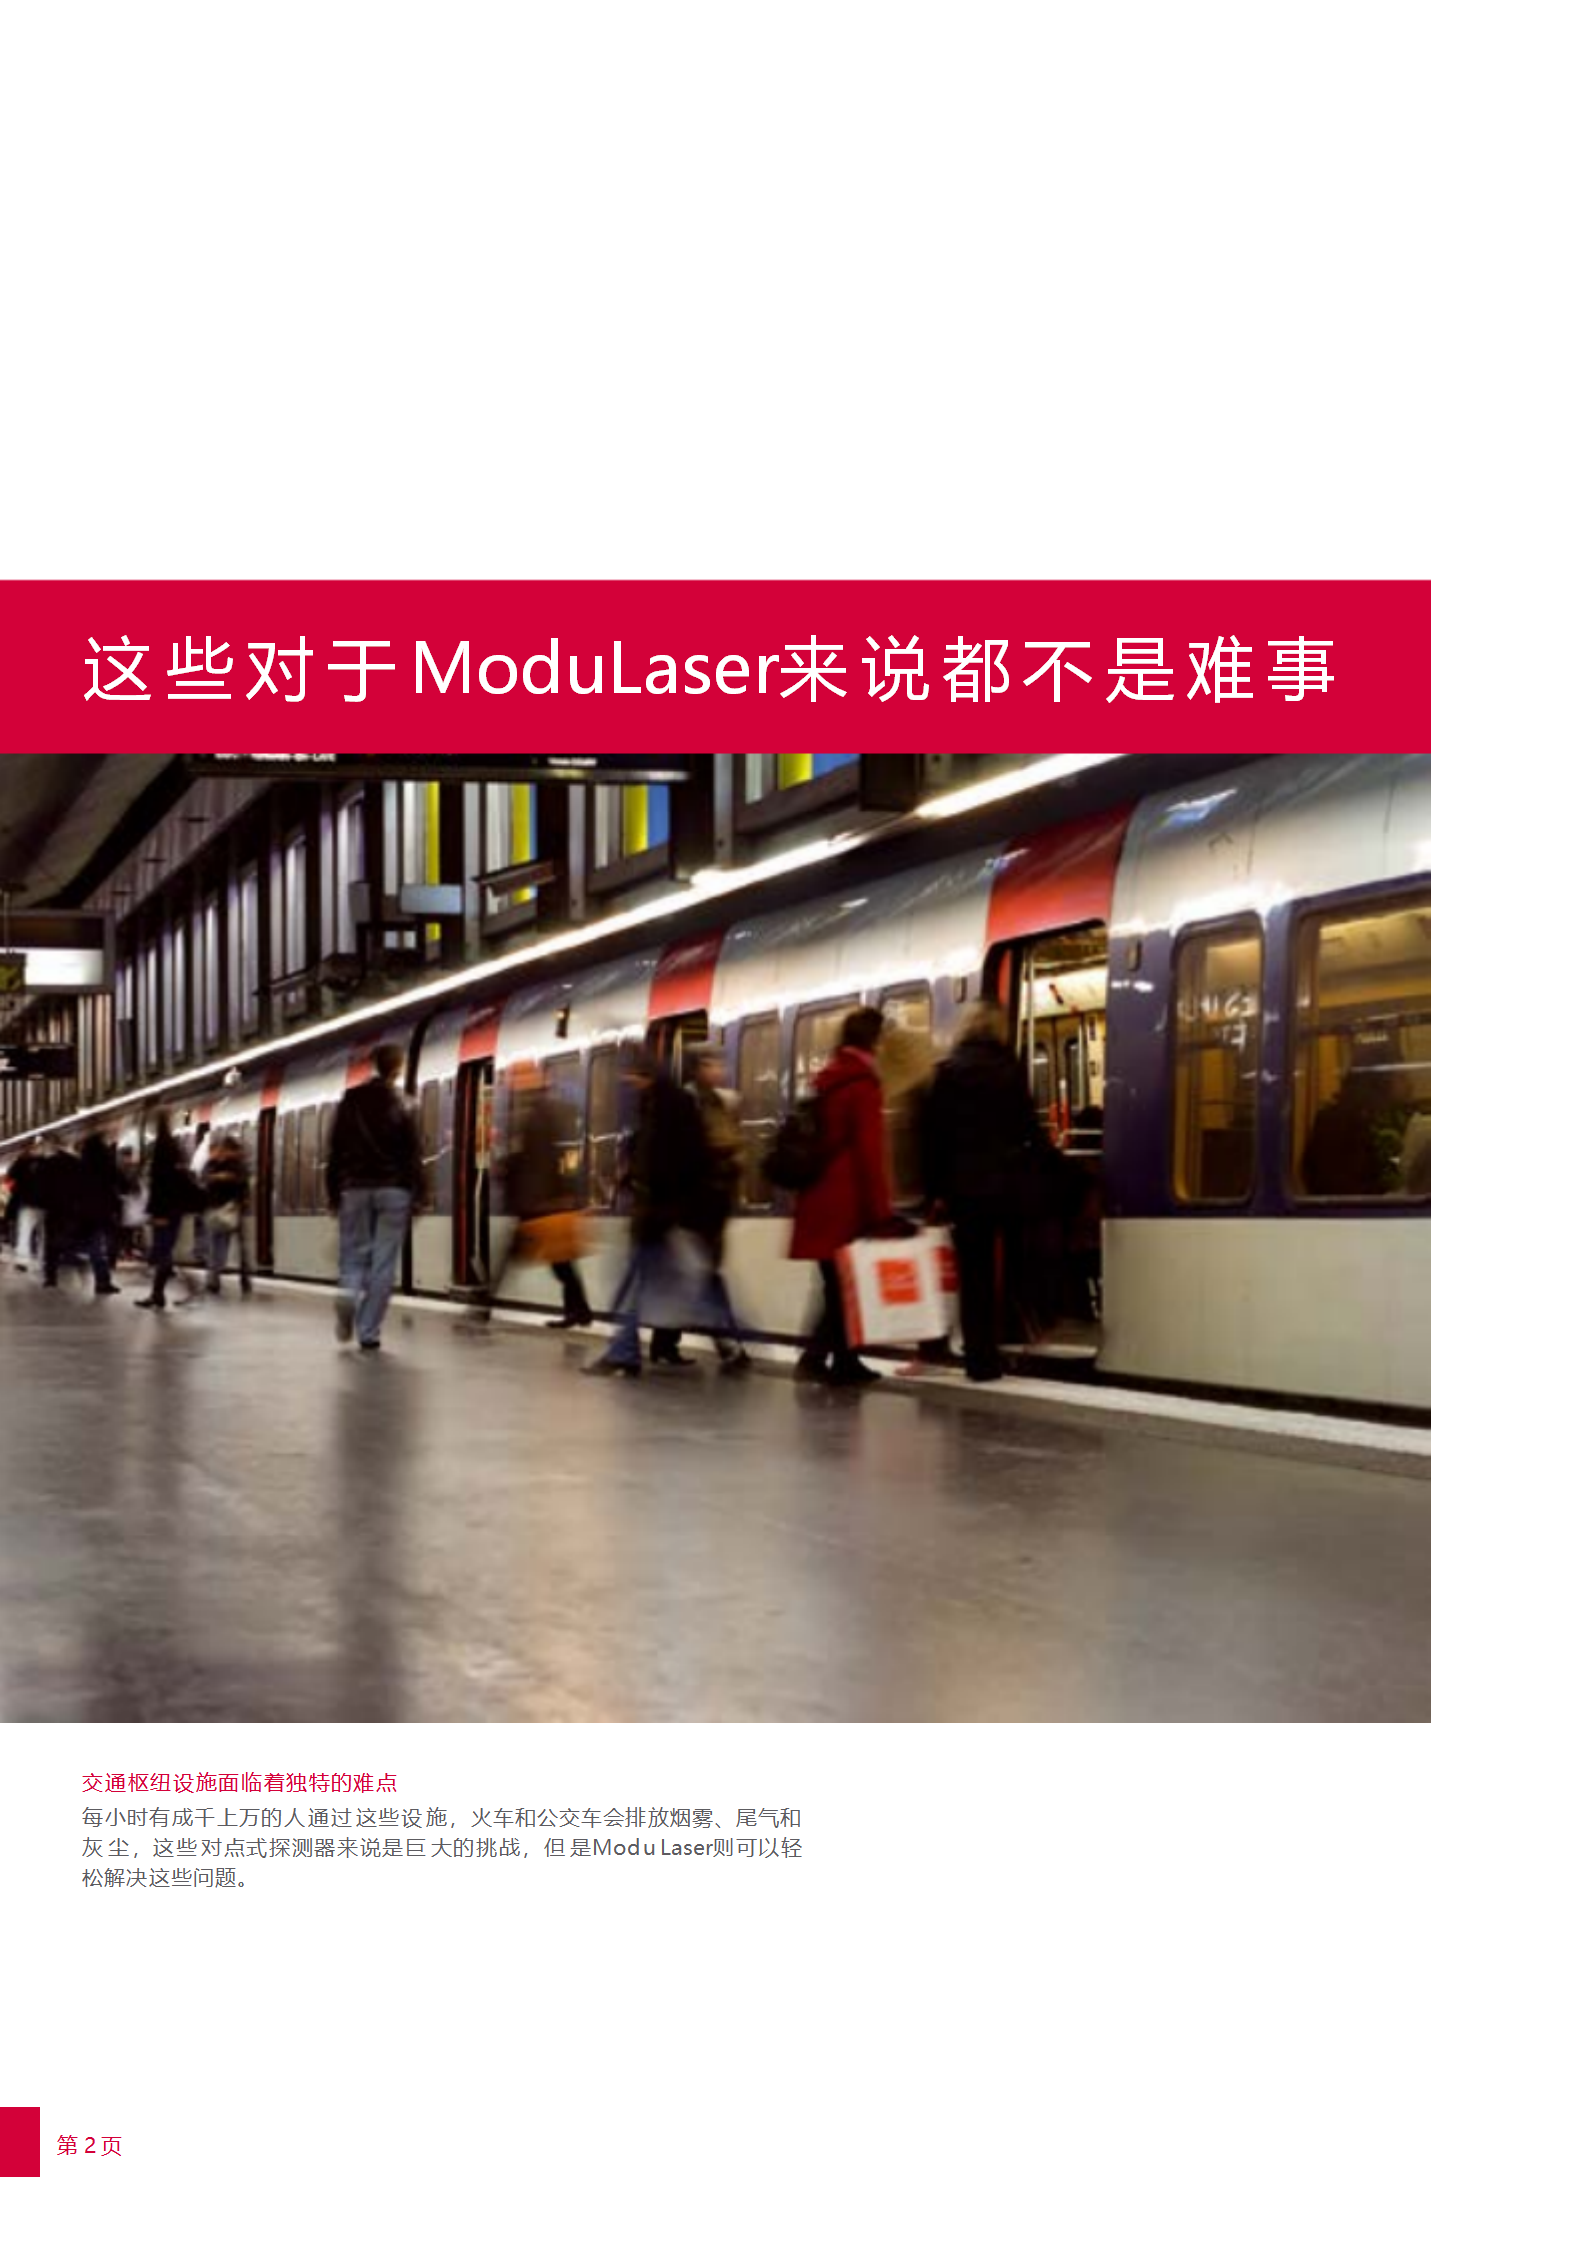 ModuLaser-多通道吸气式烟雾探测器-产品样本_02.png